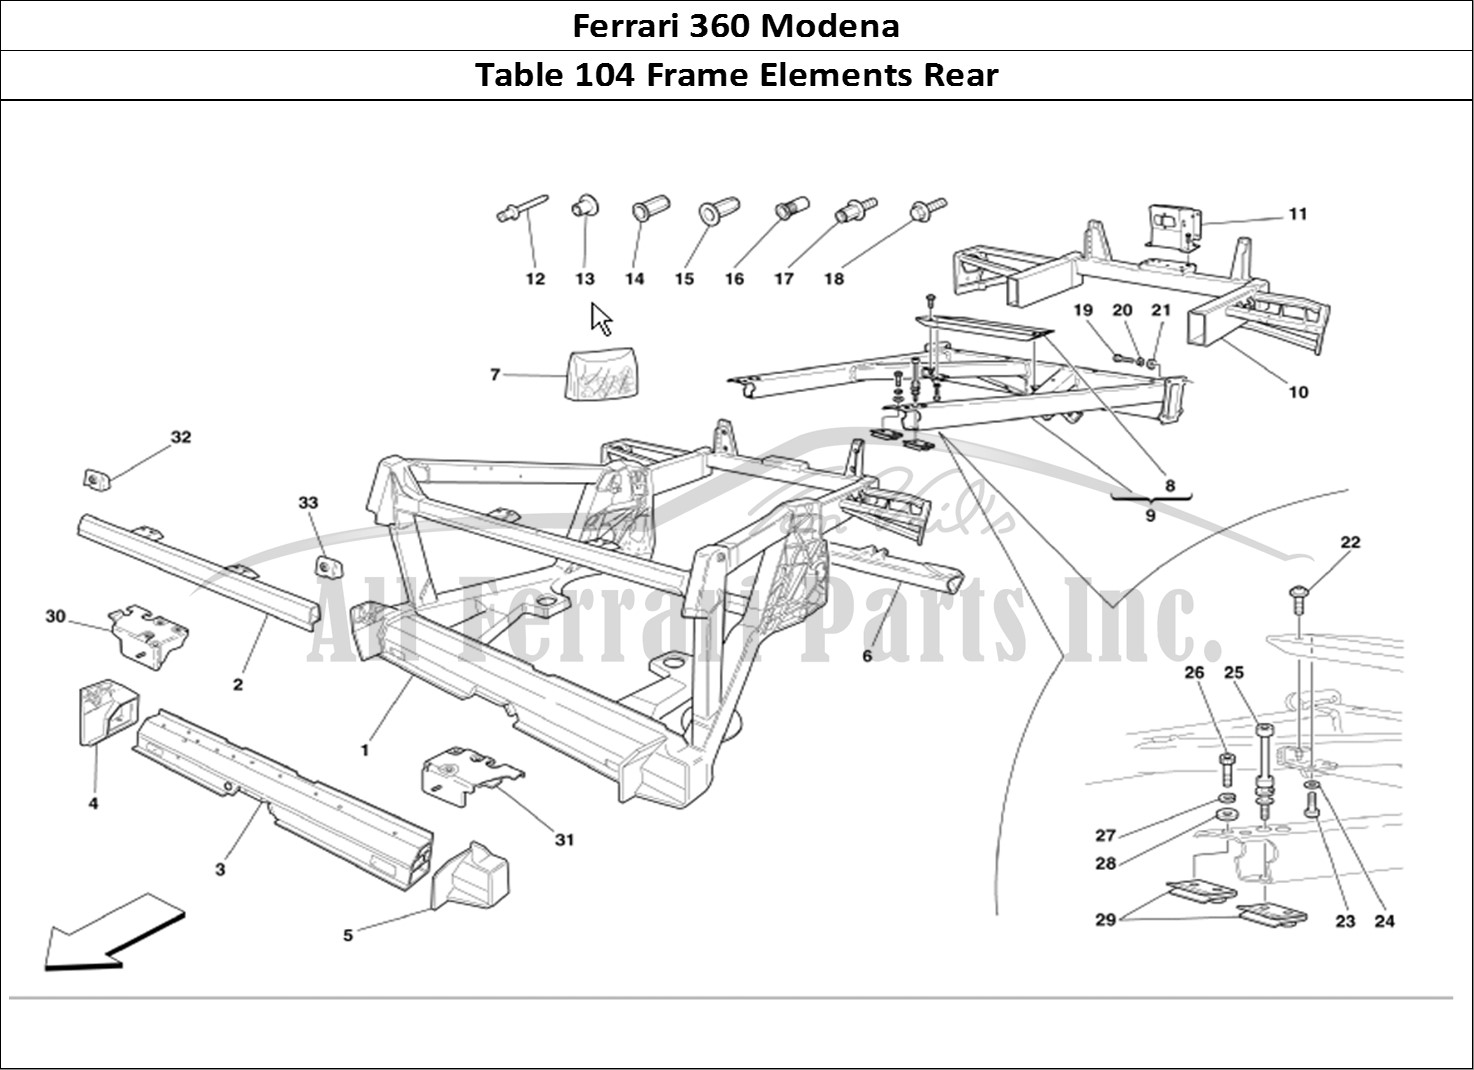 Ferrari Parts Ferrari 360 Modena Page 104 Frame Rear Elements Struc